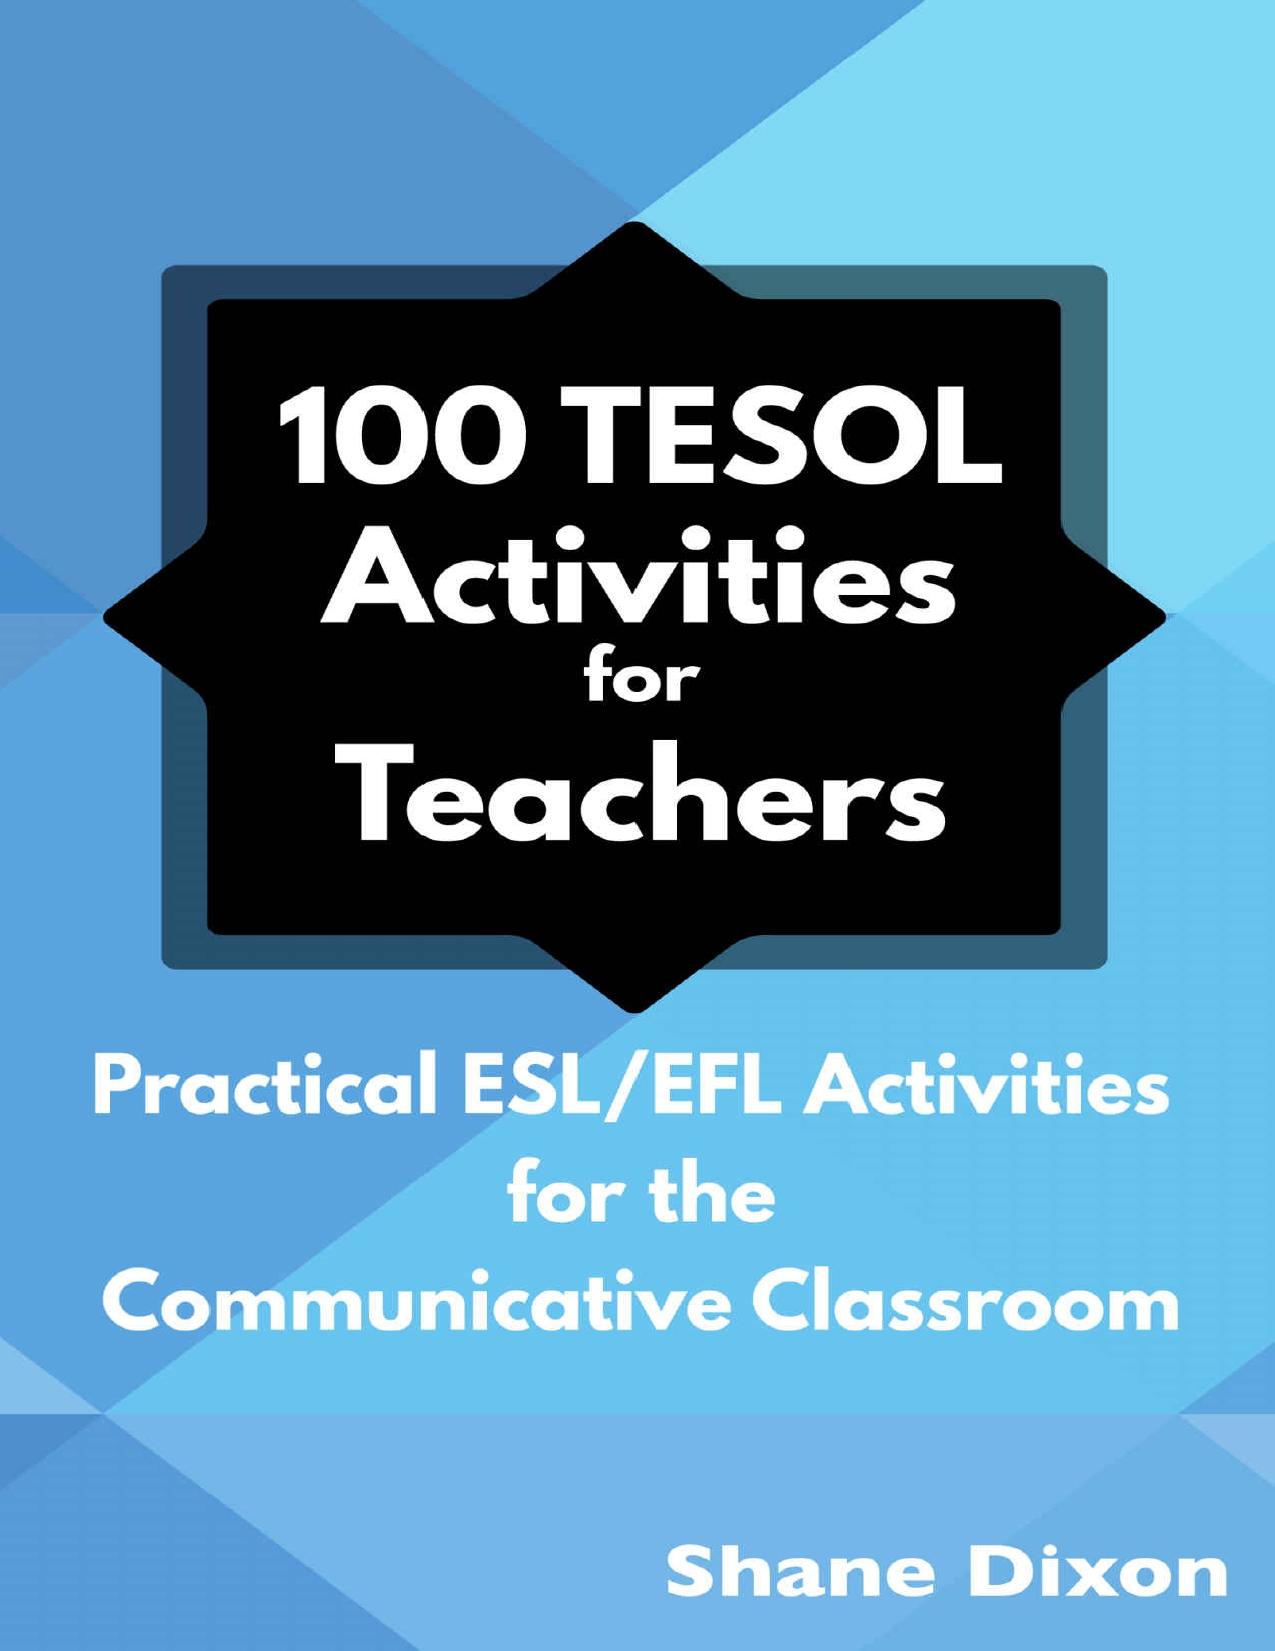 100 TESOL Activities for Teachers_ Practical ESL_EFL Activities for the Communicative Classroom.jpg